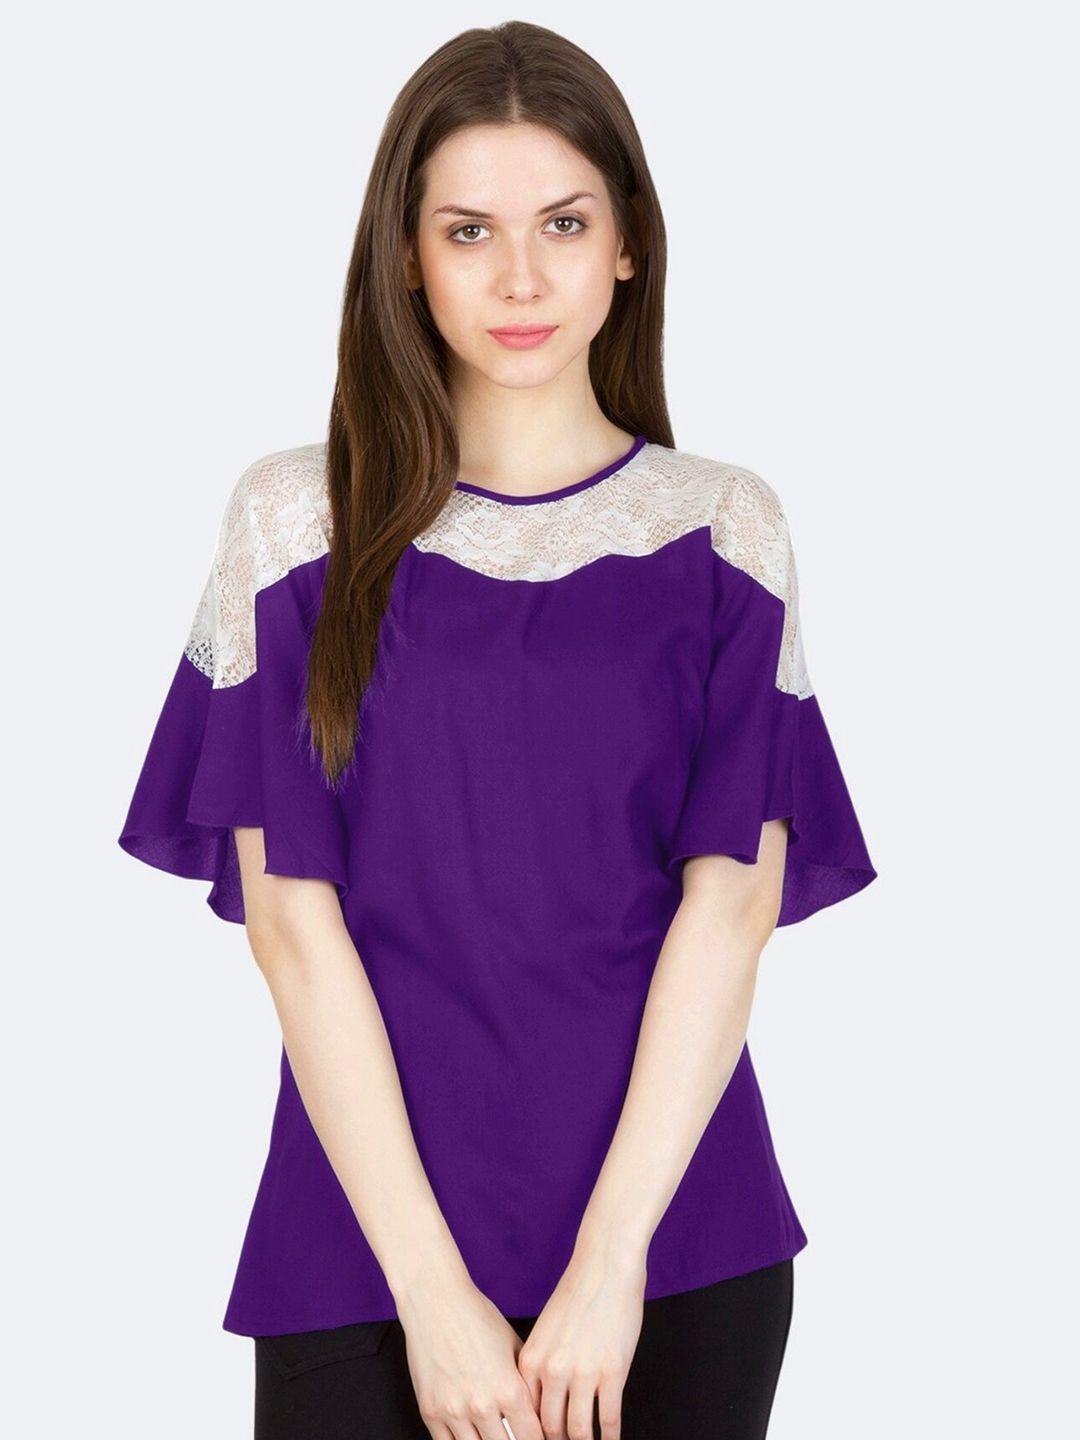 patrorna-women-purple-&-white-top